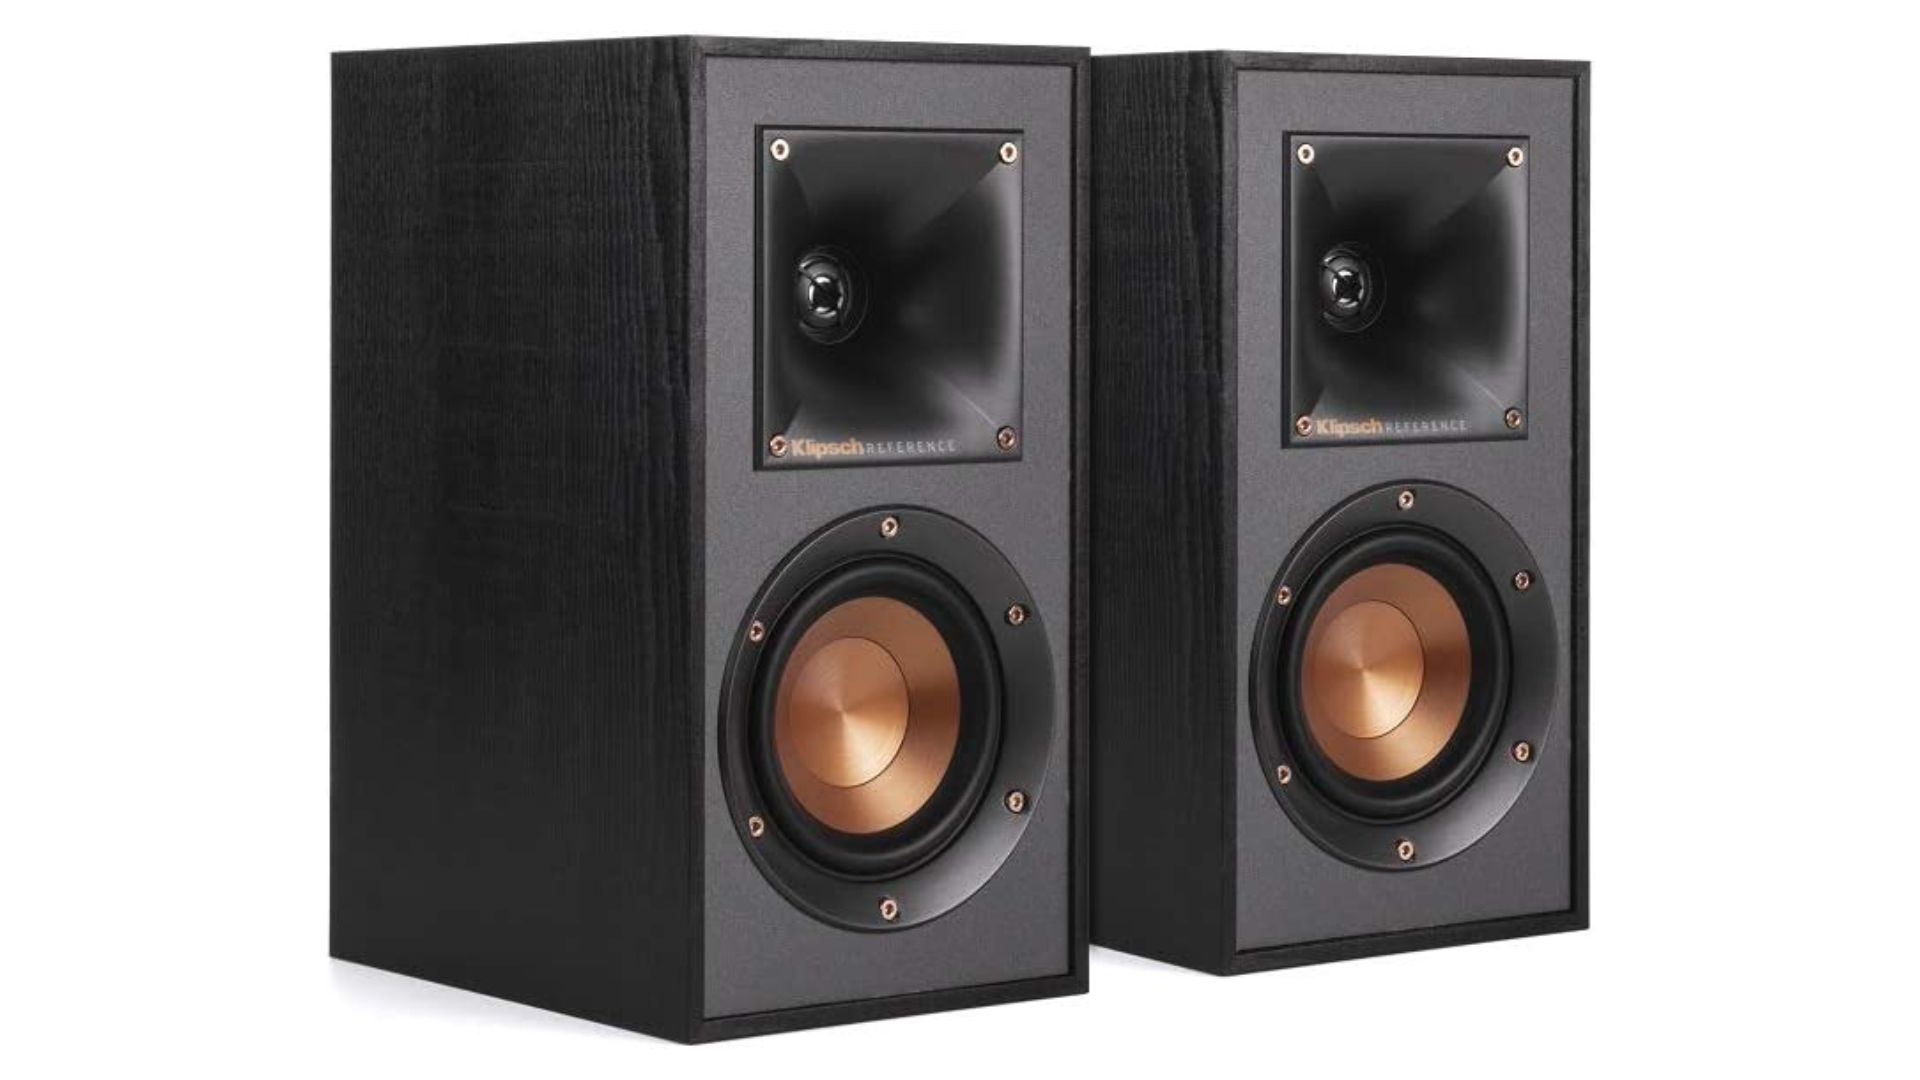 Best home speakers: Klipsch home speakers